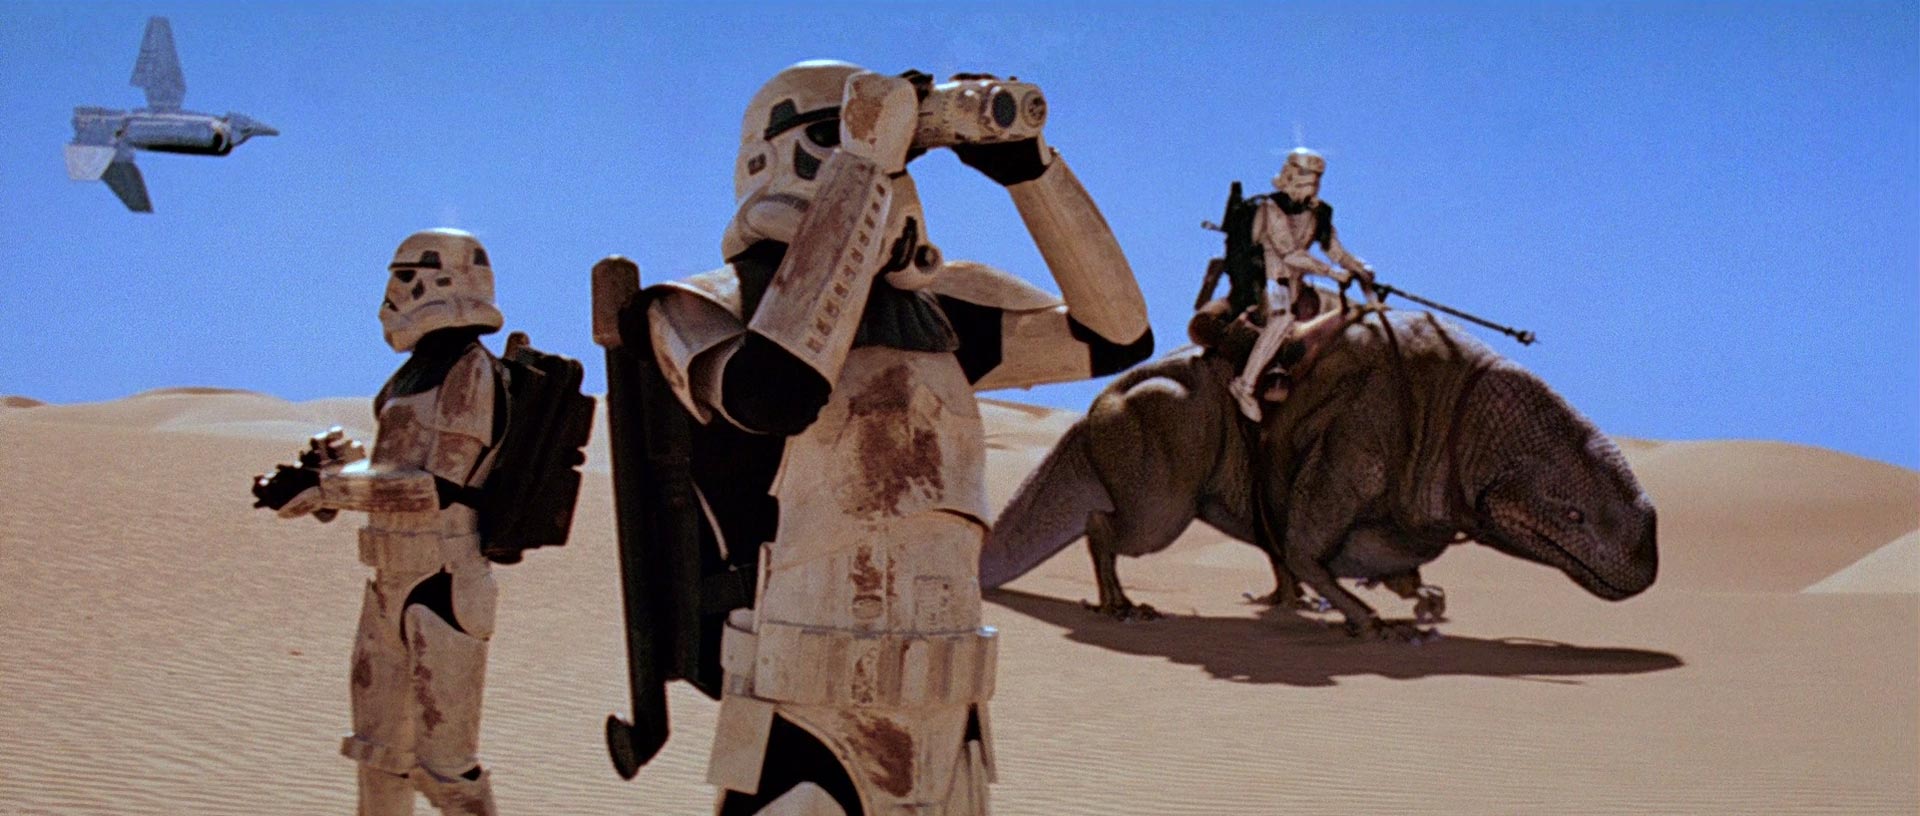 Star Wars Episode IV added CGI effects